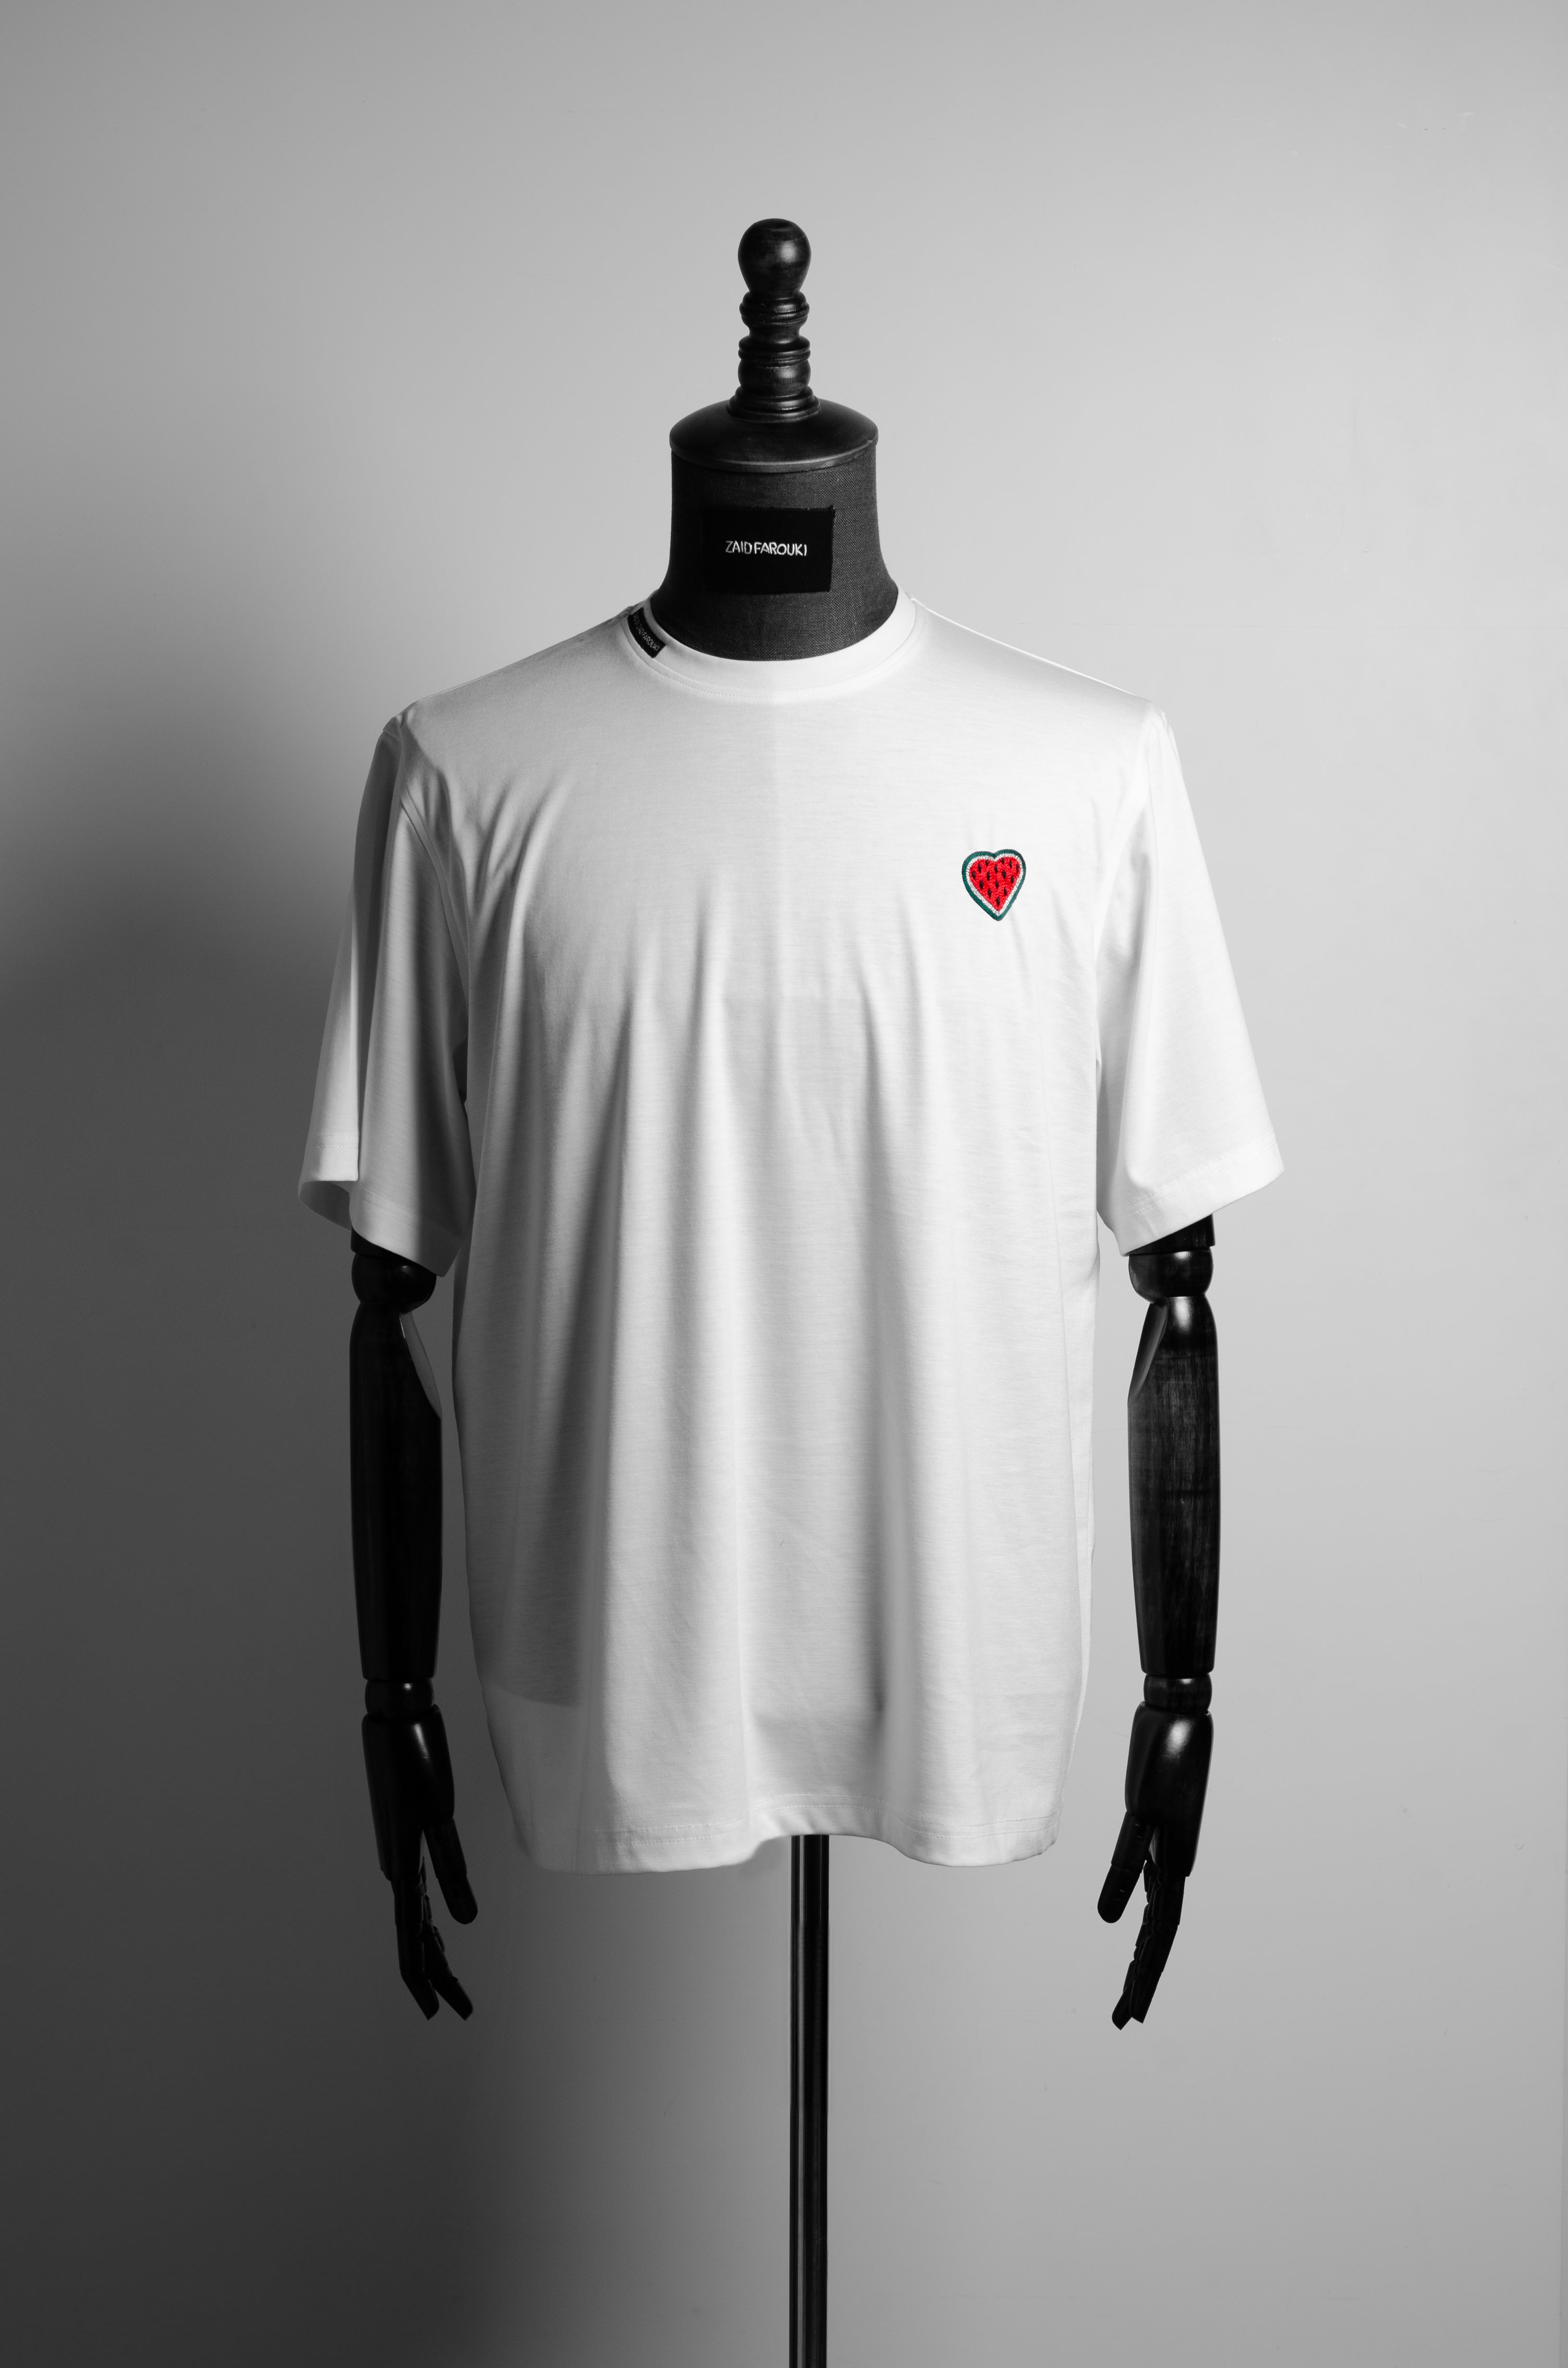 Watermelon Heart White T-shirt